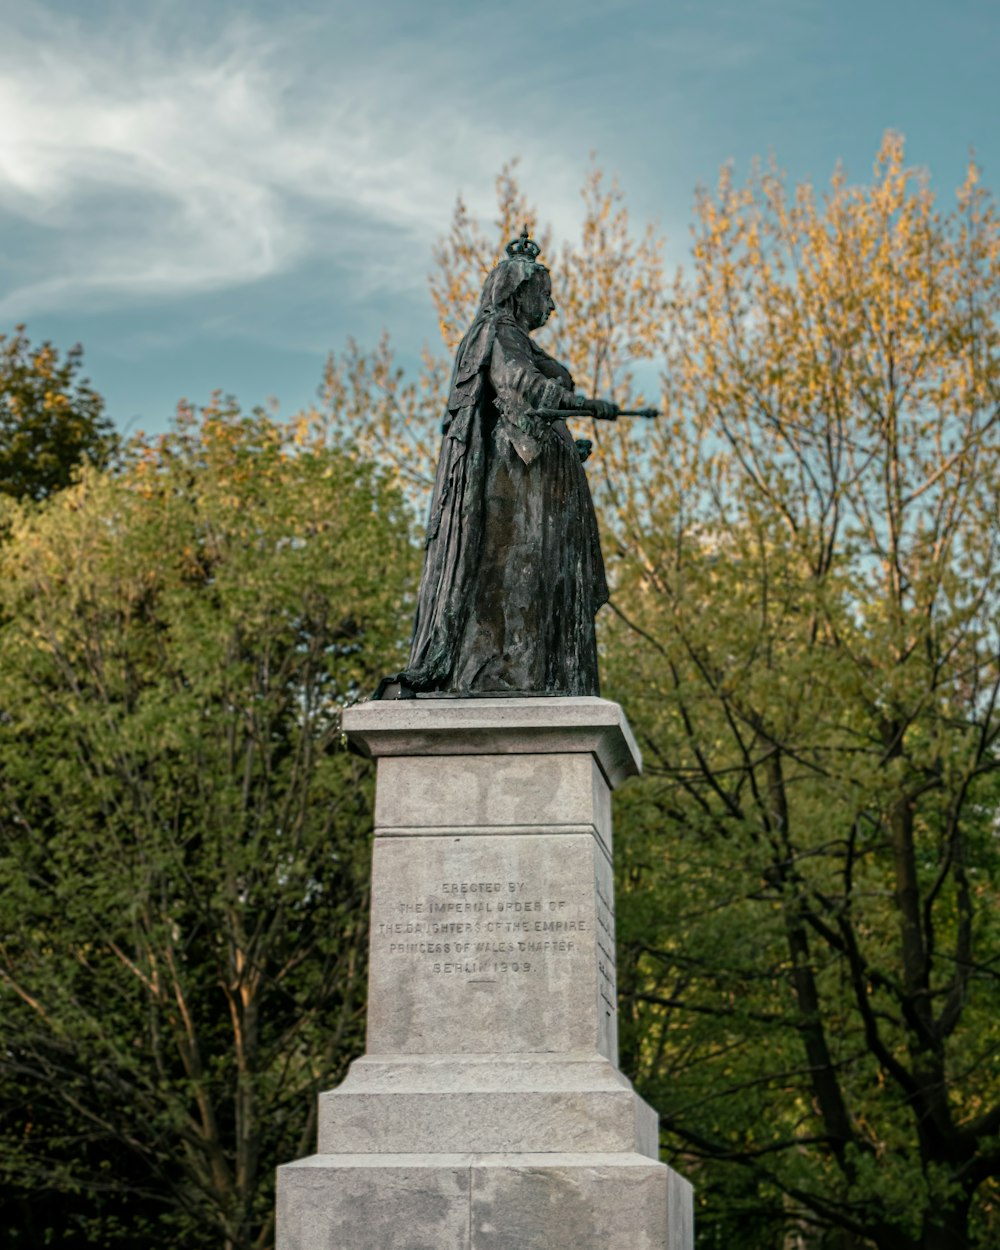 a statue of a woman holding a gun